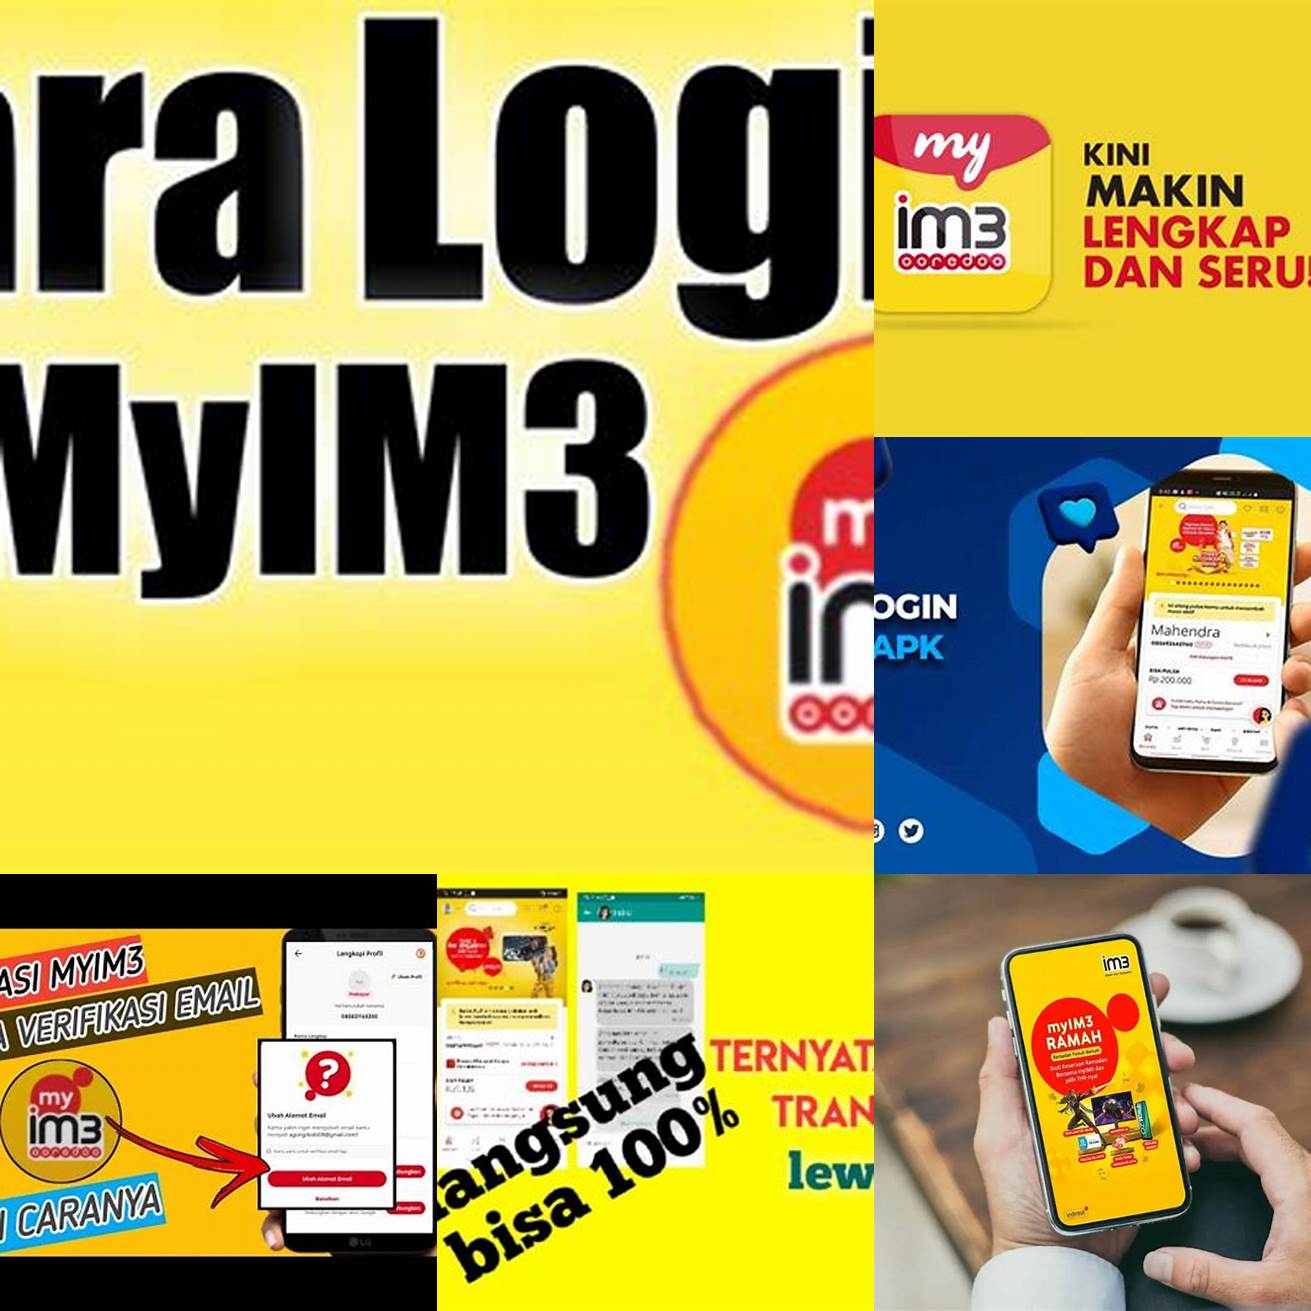 Cari dan buka aplikasi MyIM3 di smartphone Anda